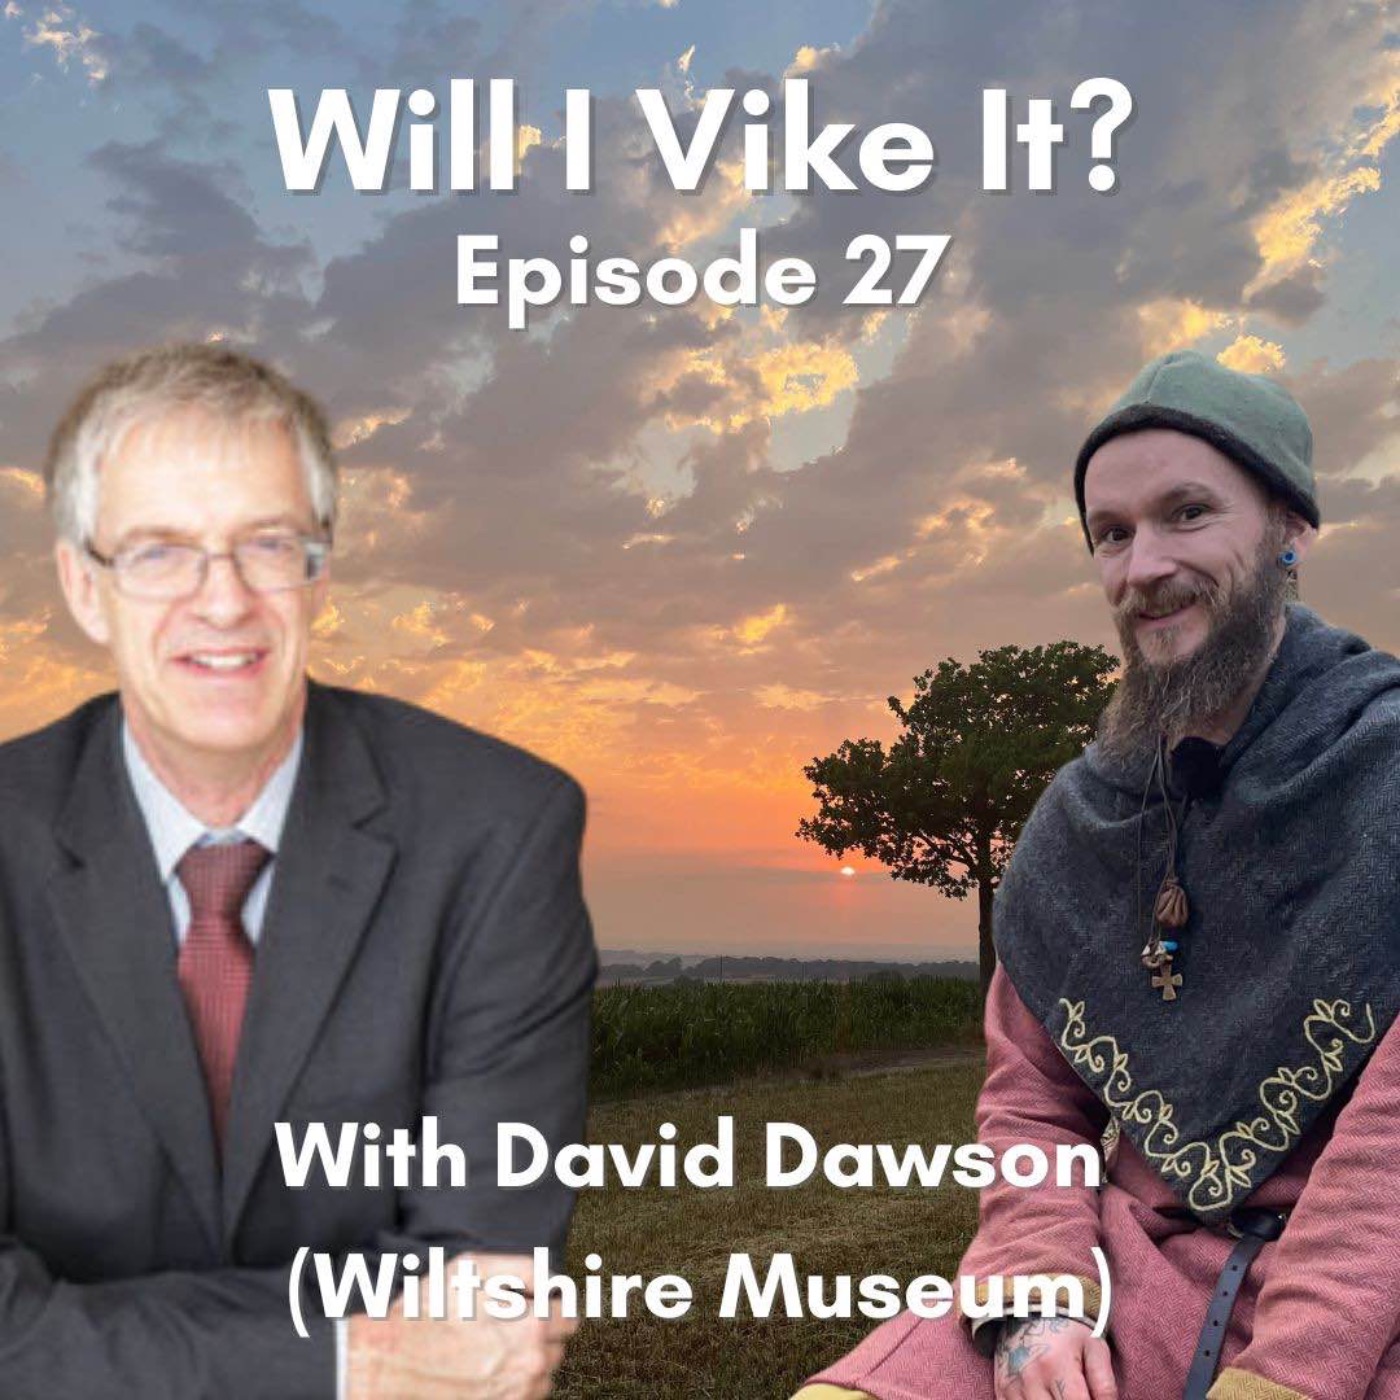 David Dawson from Wiltshire Museum